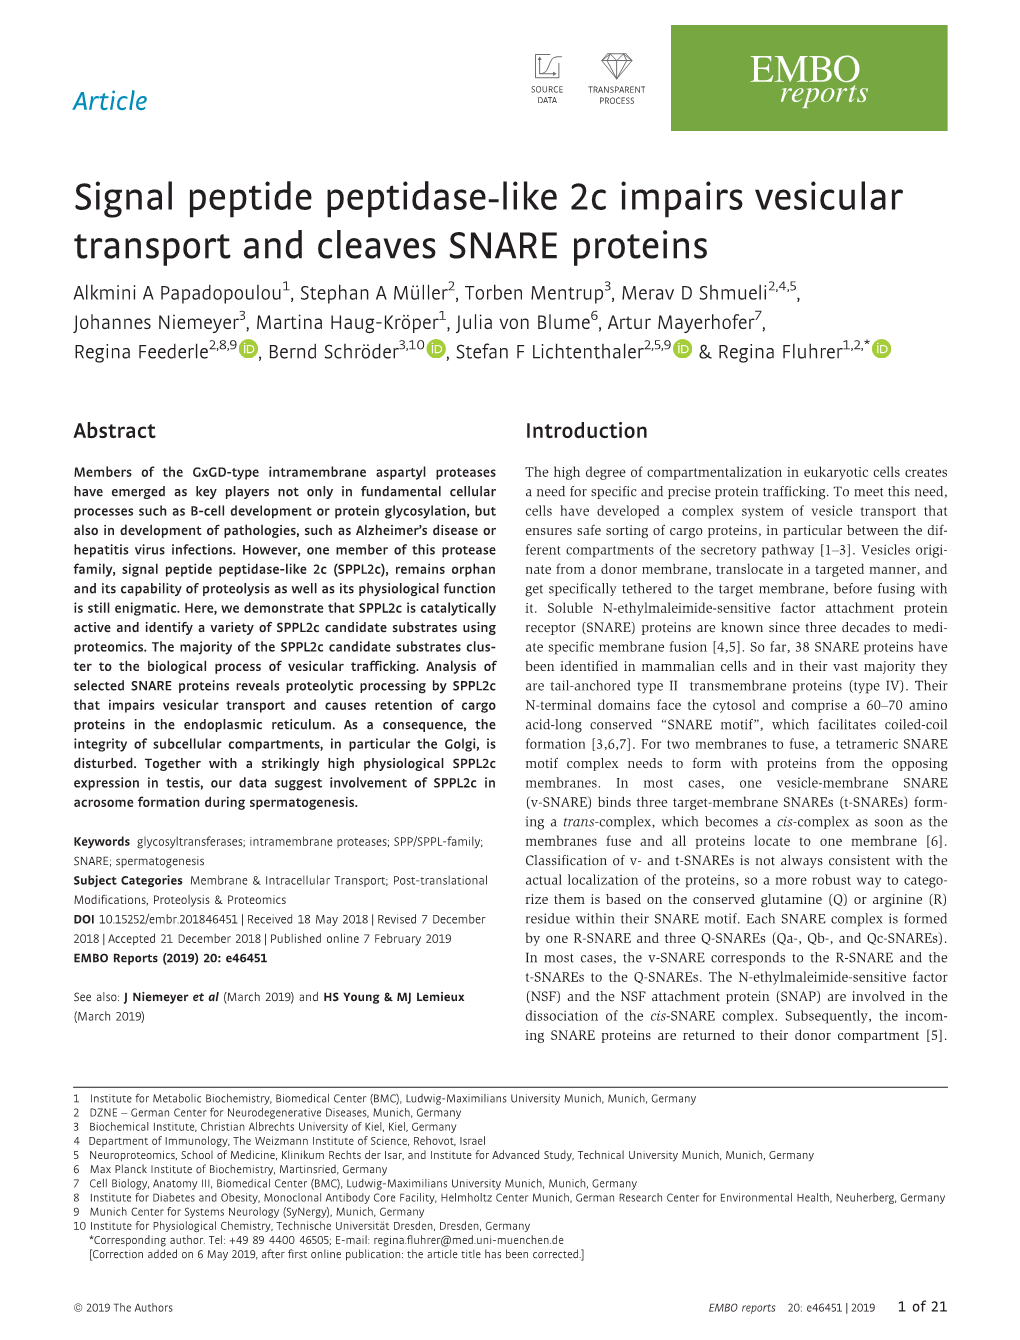 Signal Peptide Peptidase‐Like 2C Impairs Vesicular Transport And